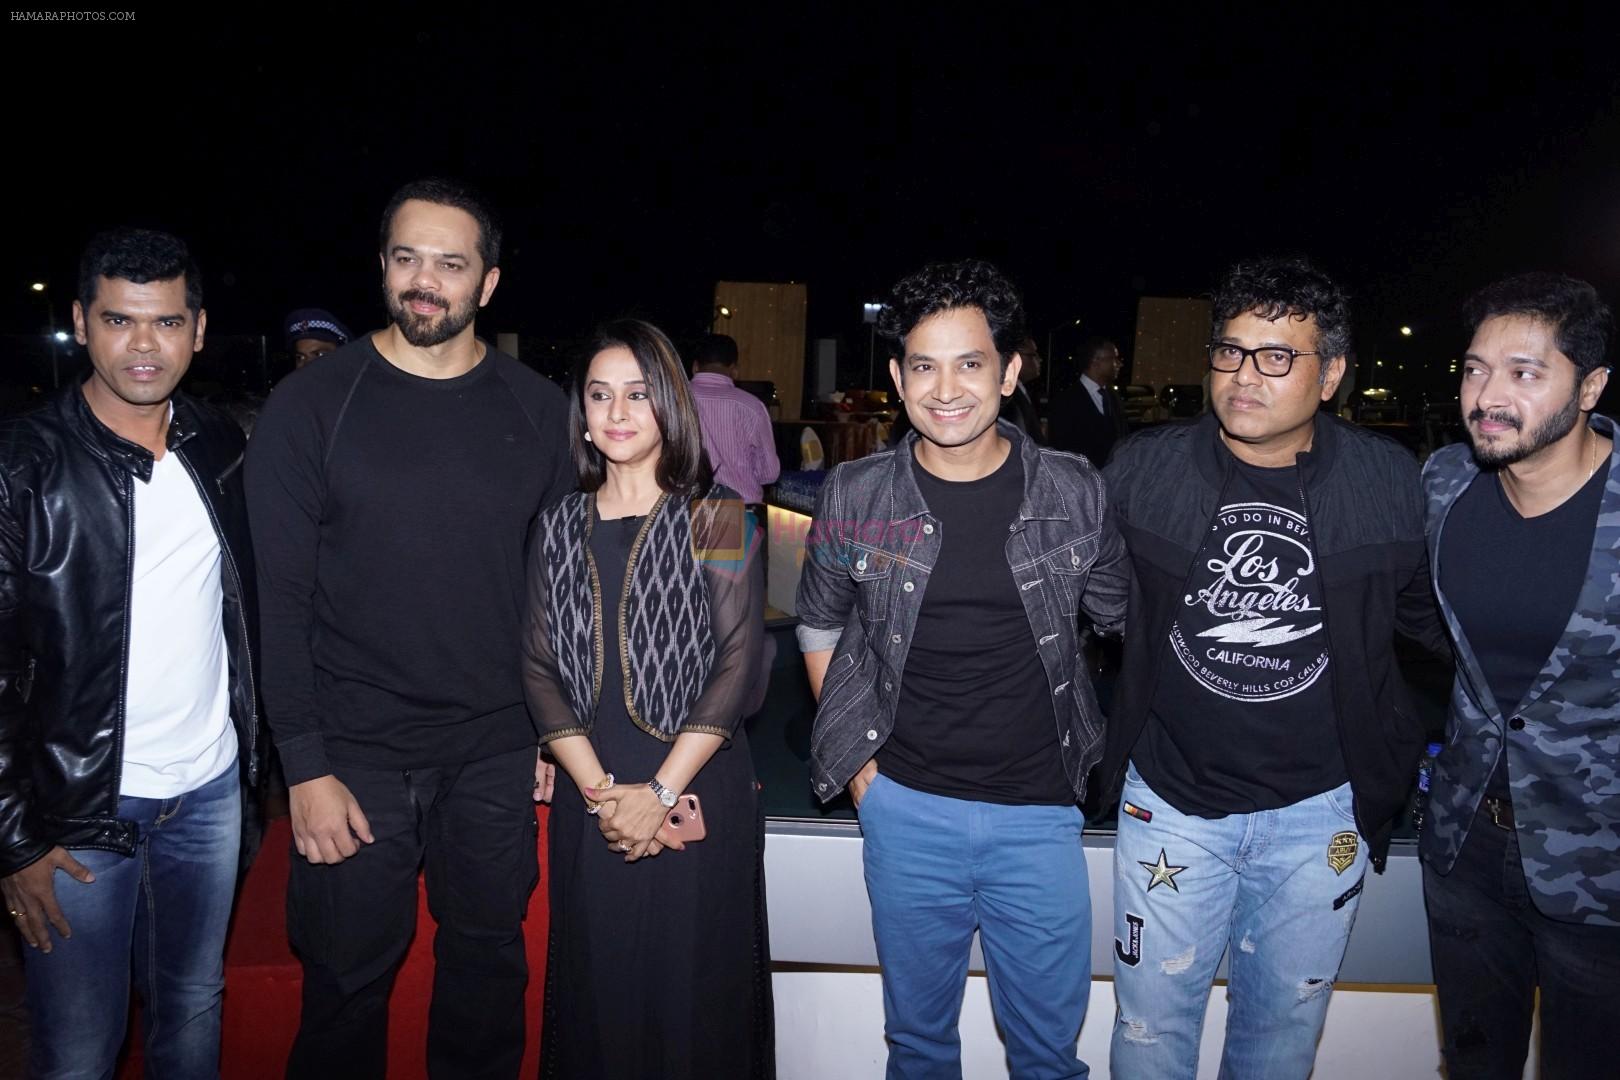 Rohit Shetty at the Trailer & Music Launch Of Marathi Film Ye Re Ye Re Paisa on 15th D3ec 2017